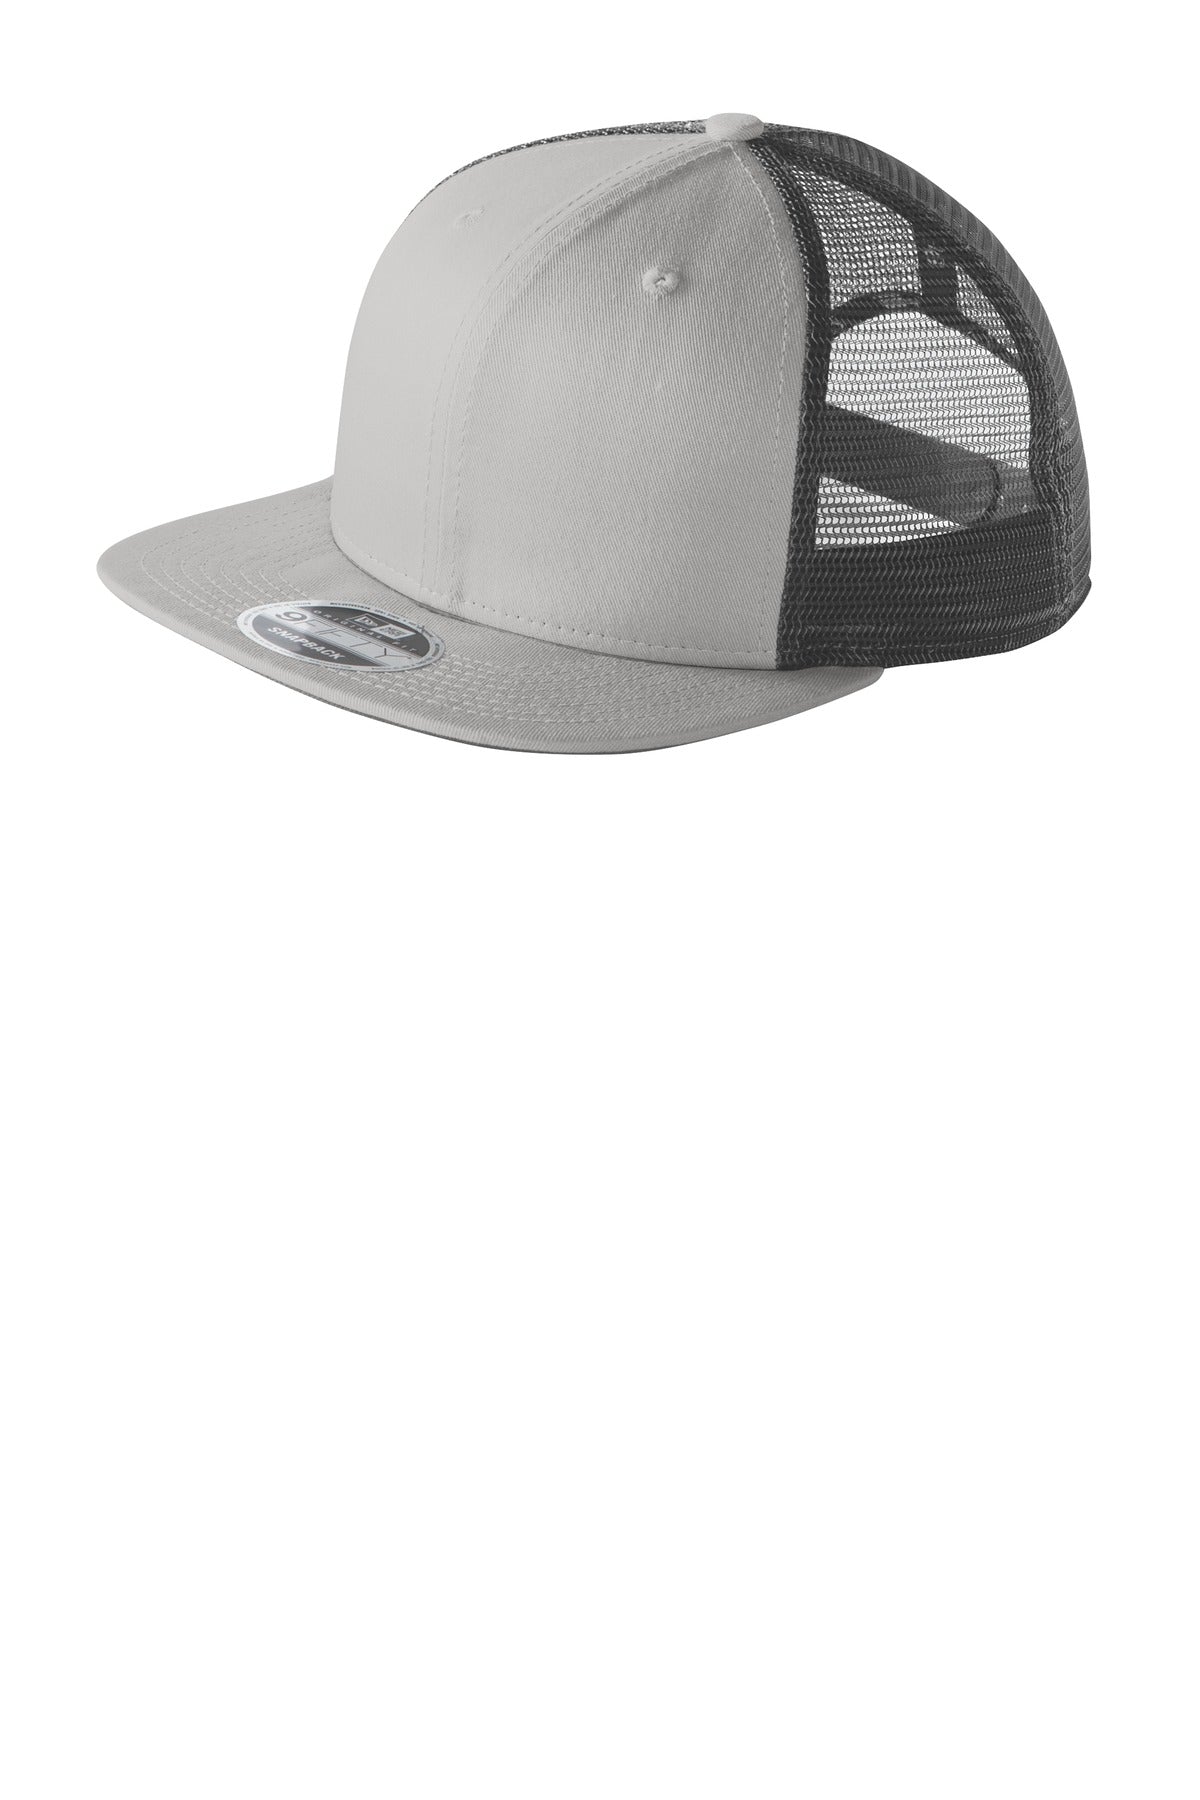 Caps Grey/ Graphite OSFA New Era